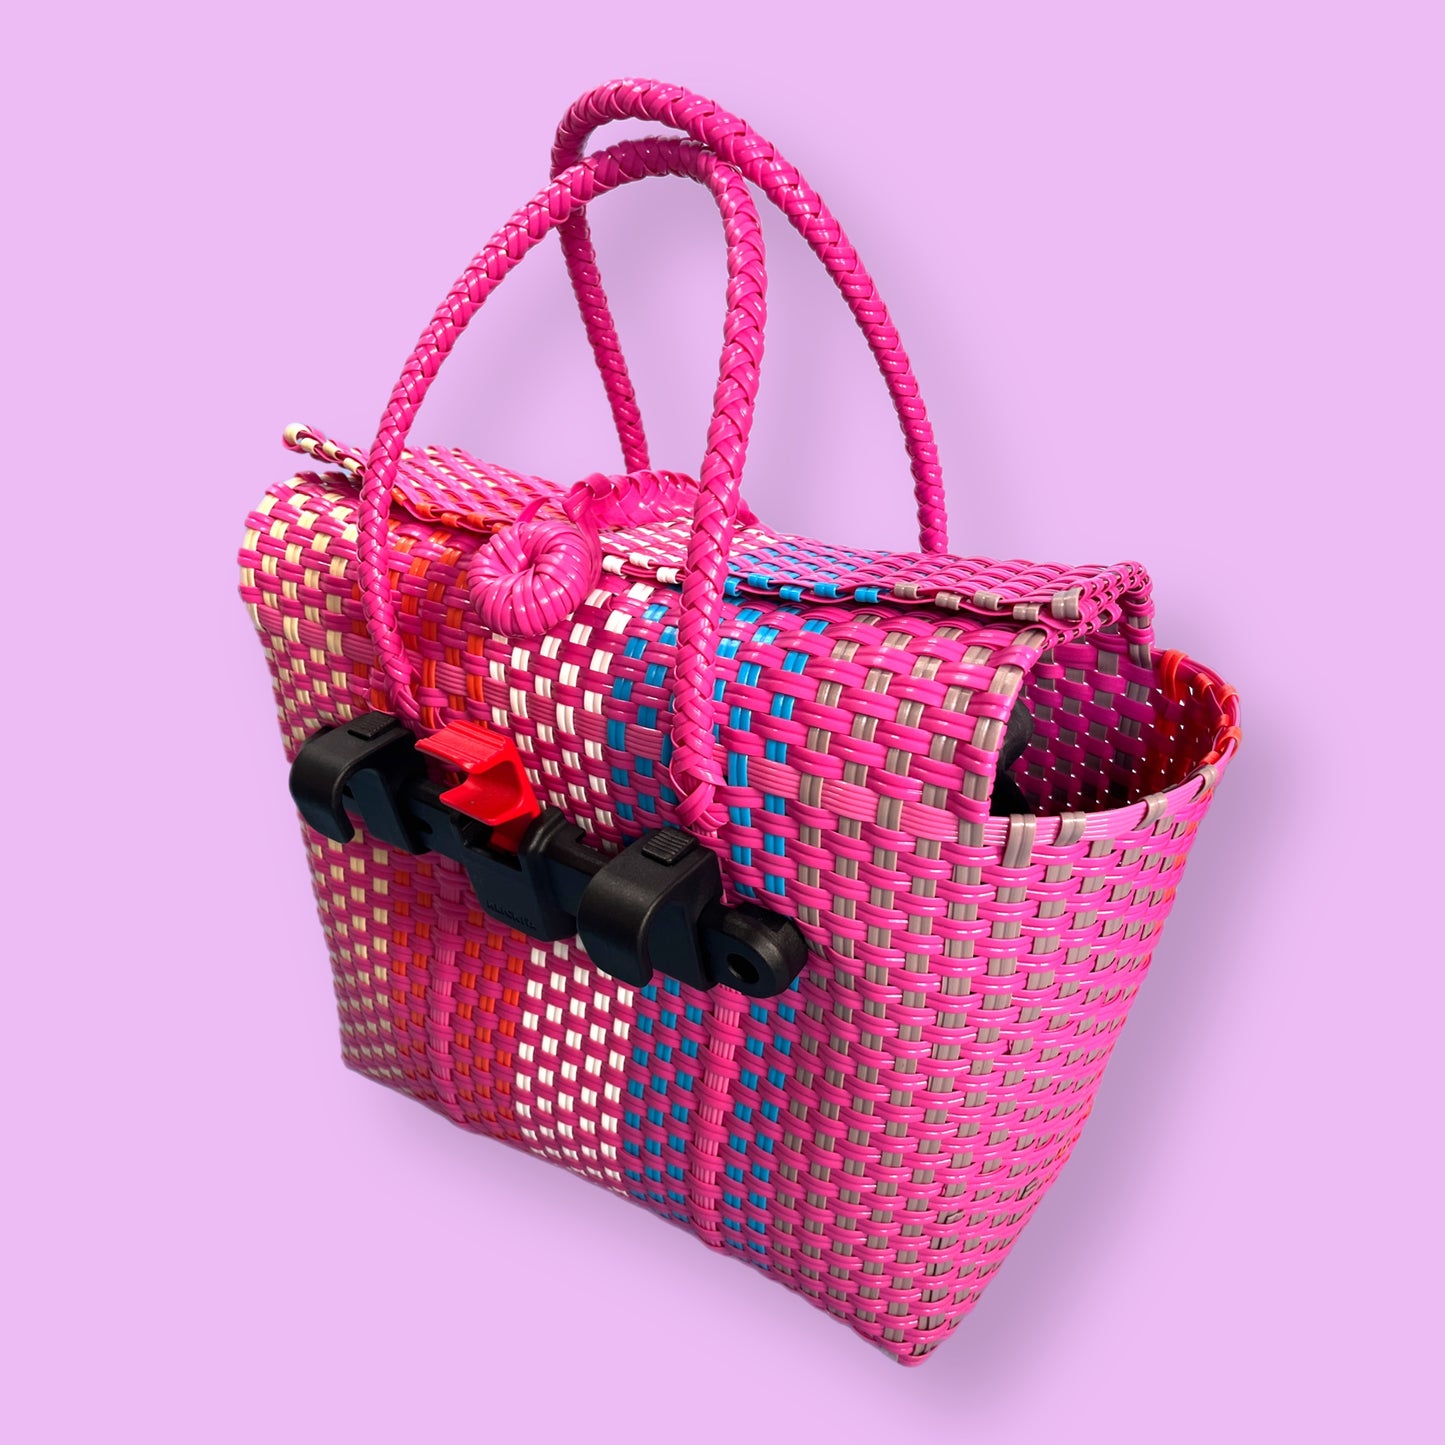 Goodordering woven basket pannier bag bike bag 